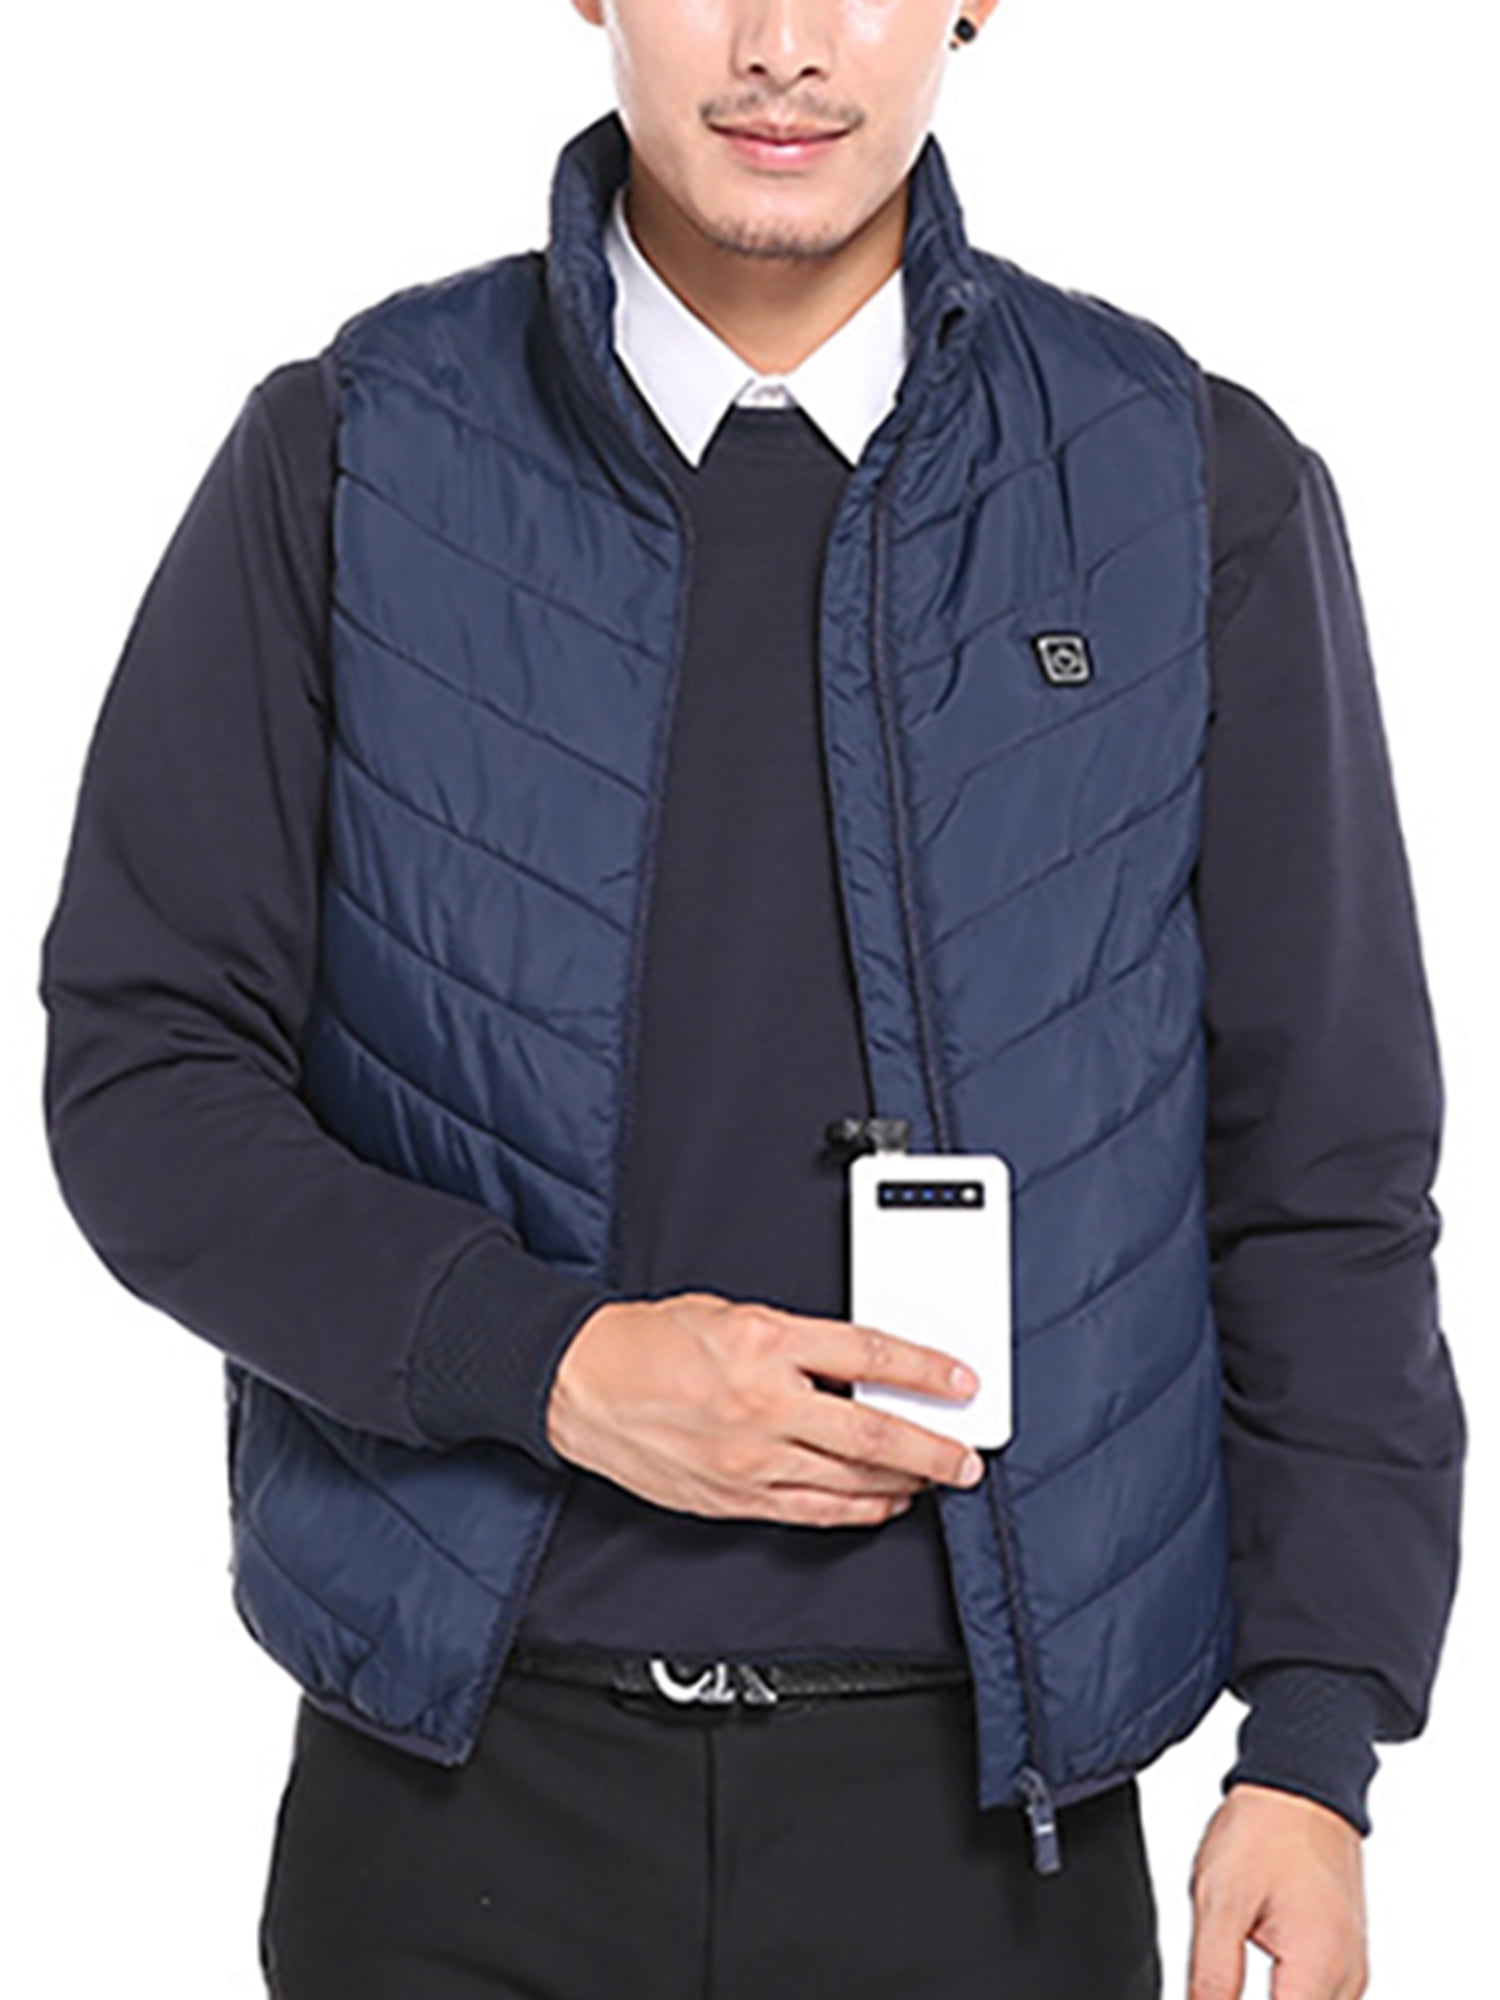 Men Smart Heated USB Sleeveless Vest Jacket heating Wind Resistant Coats Warm US 